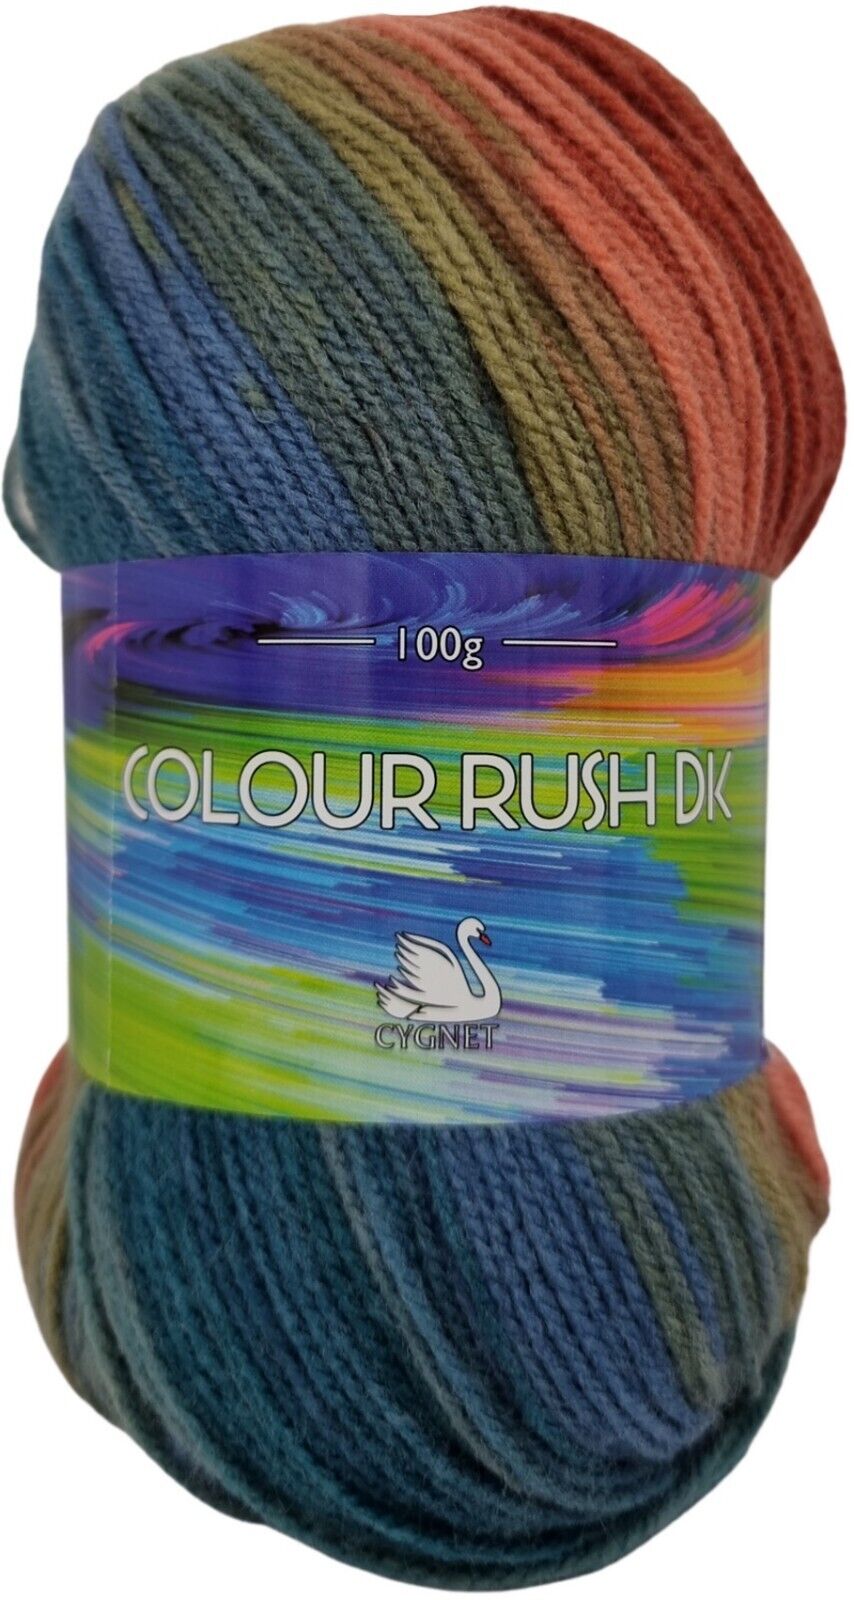 Cygnet COLOUR RUSH DK Knitting Yarn / Wool - 100g Double Knit Ball - Breeze